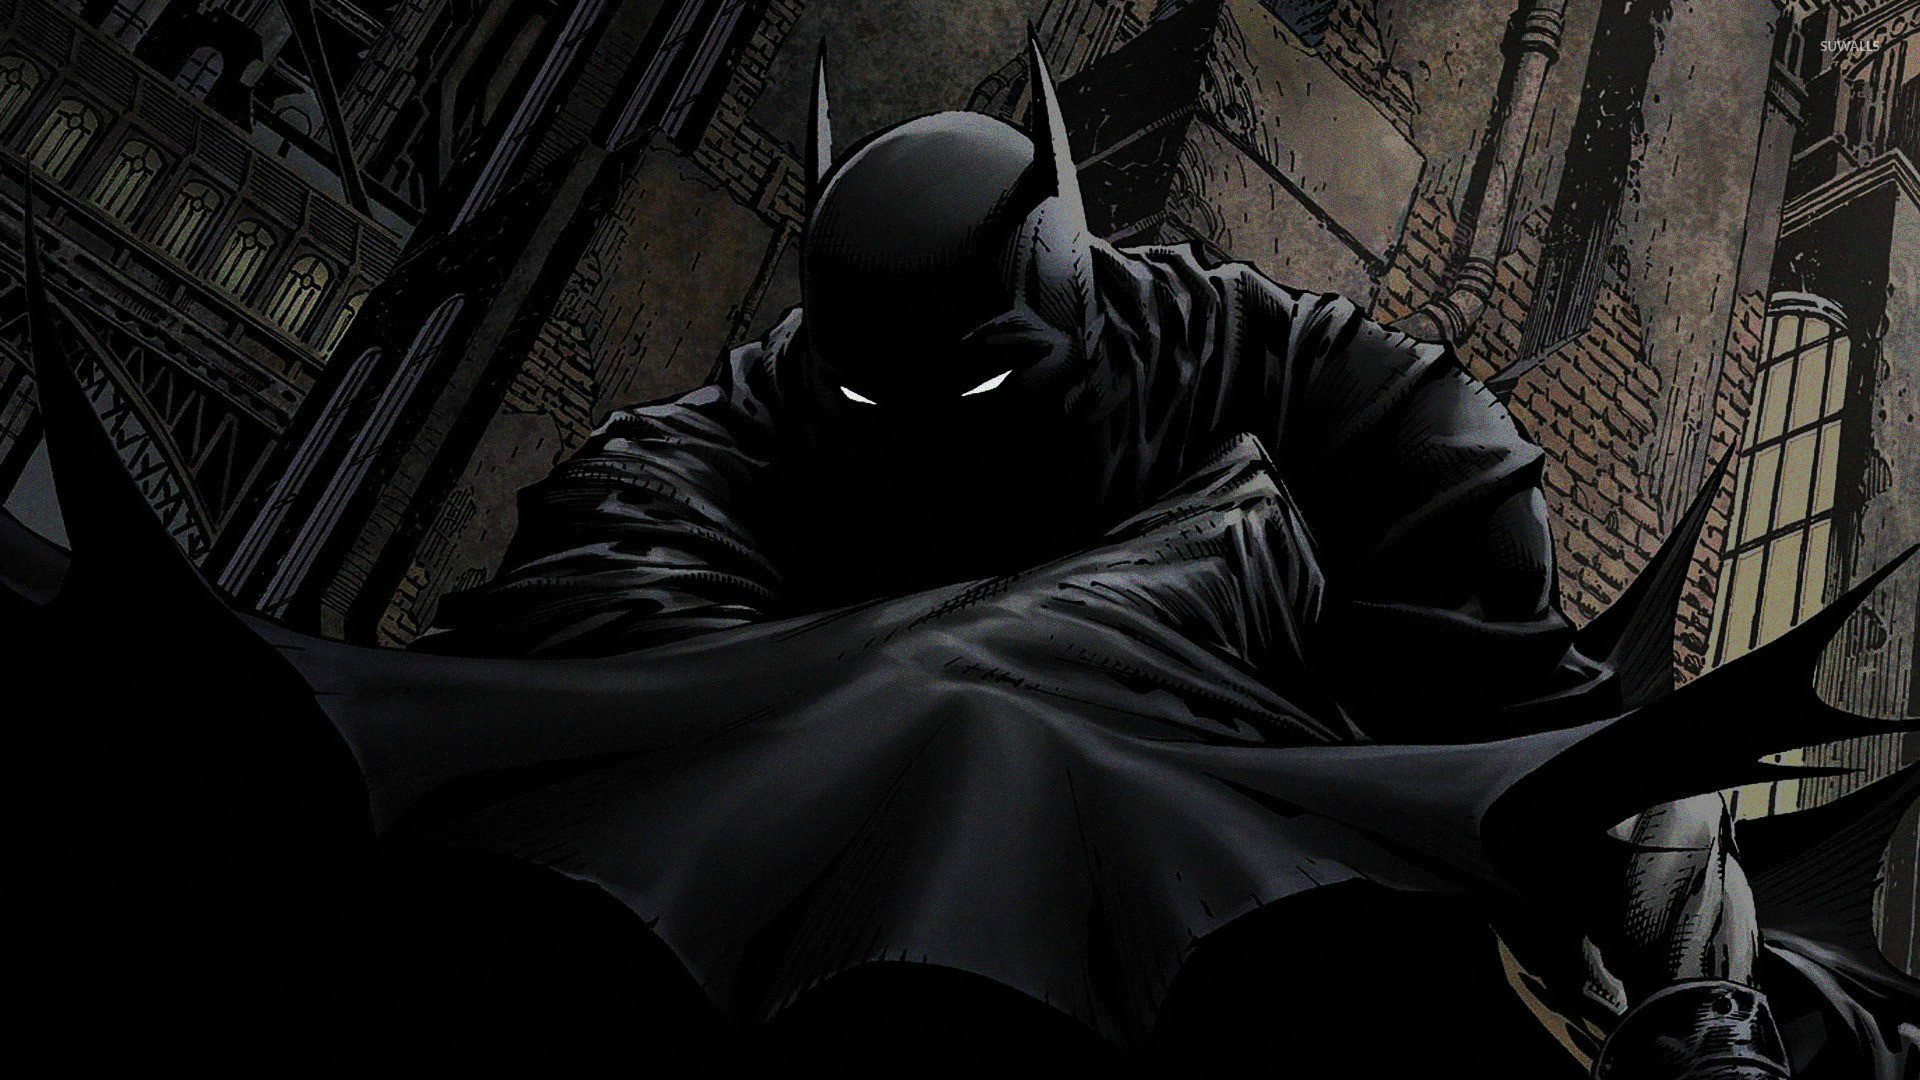 Wallpaper Batman Superhero dc Comics Art DC Universe Background   Download Free Image